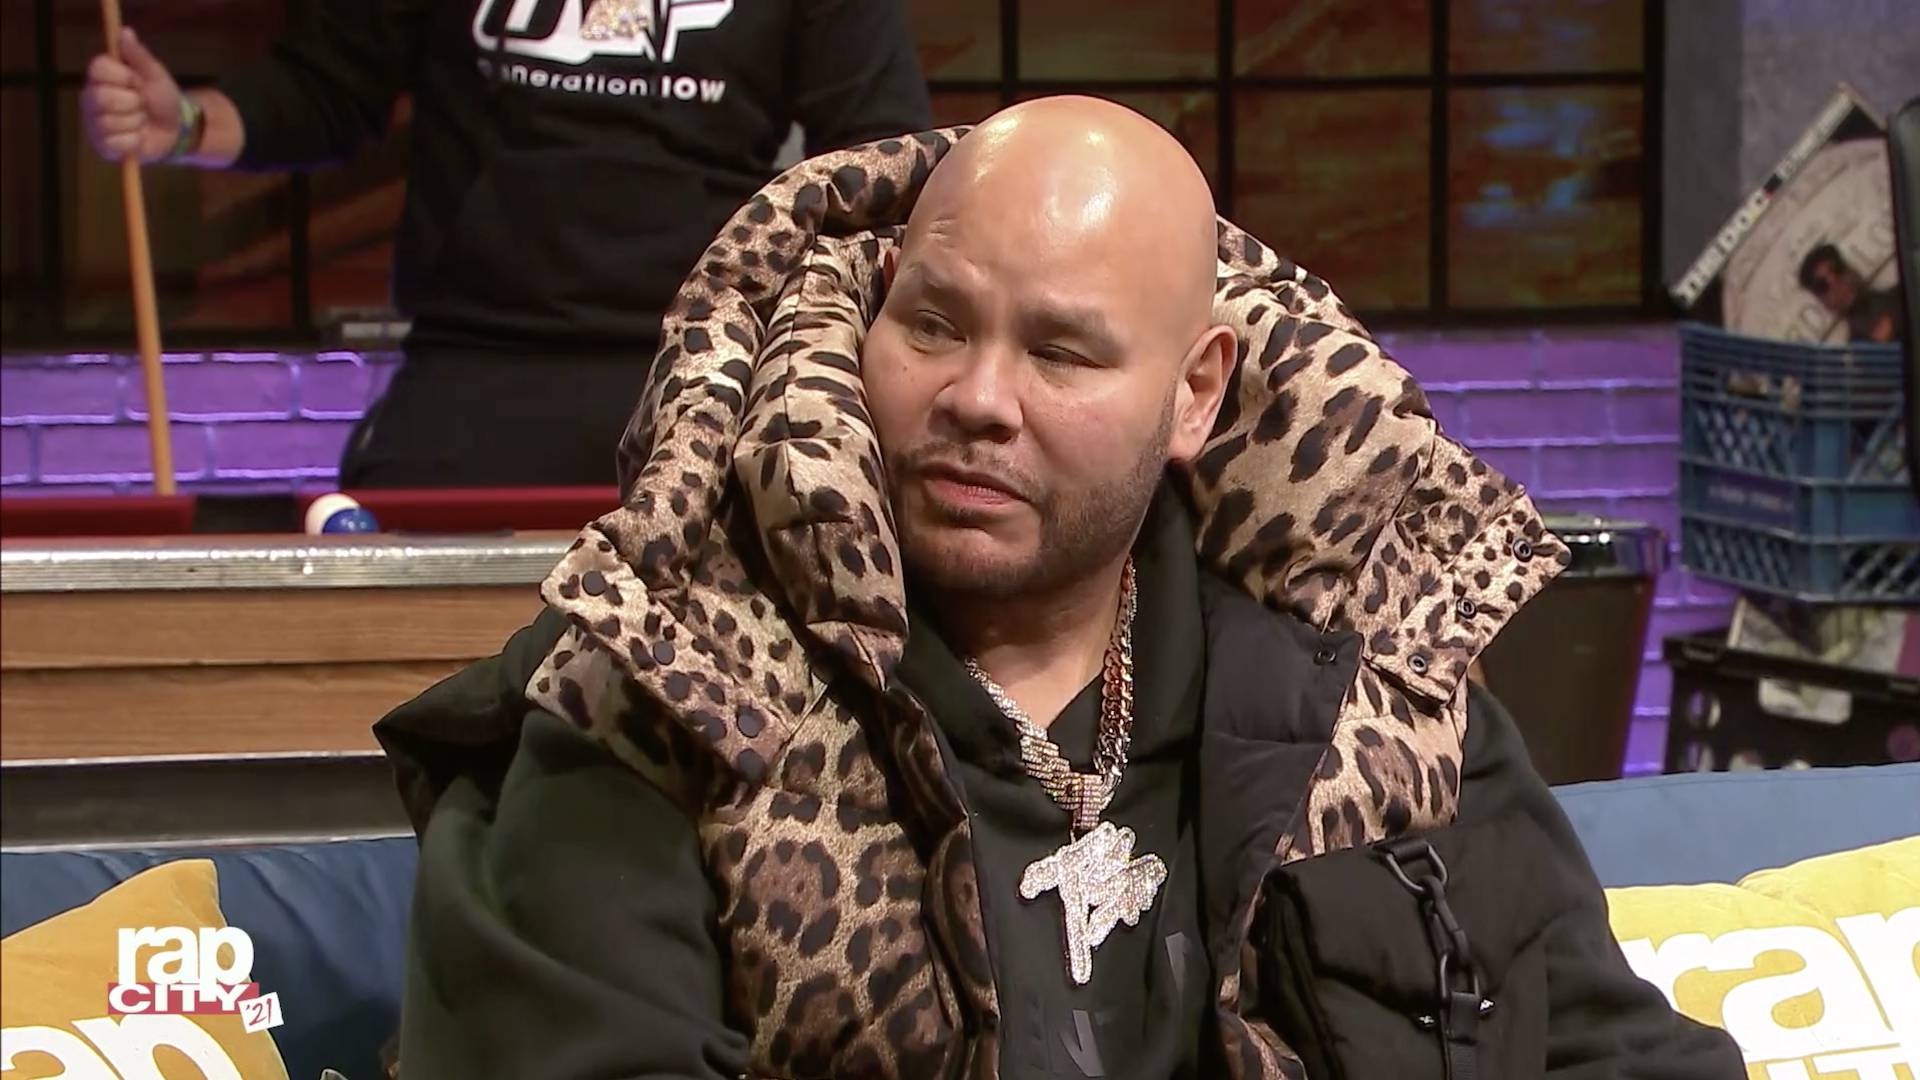 Fat Joe interviewed on Rap City in a big jacket with cheetah print.